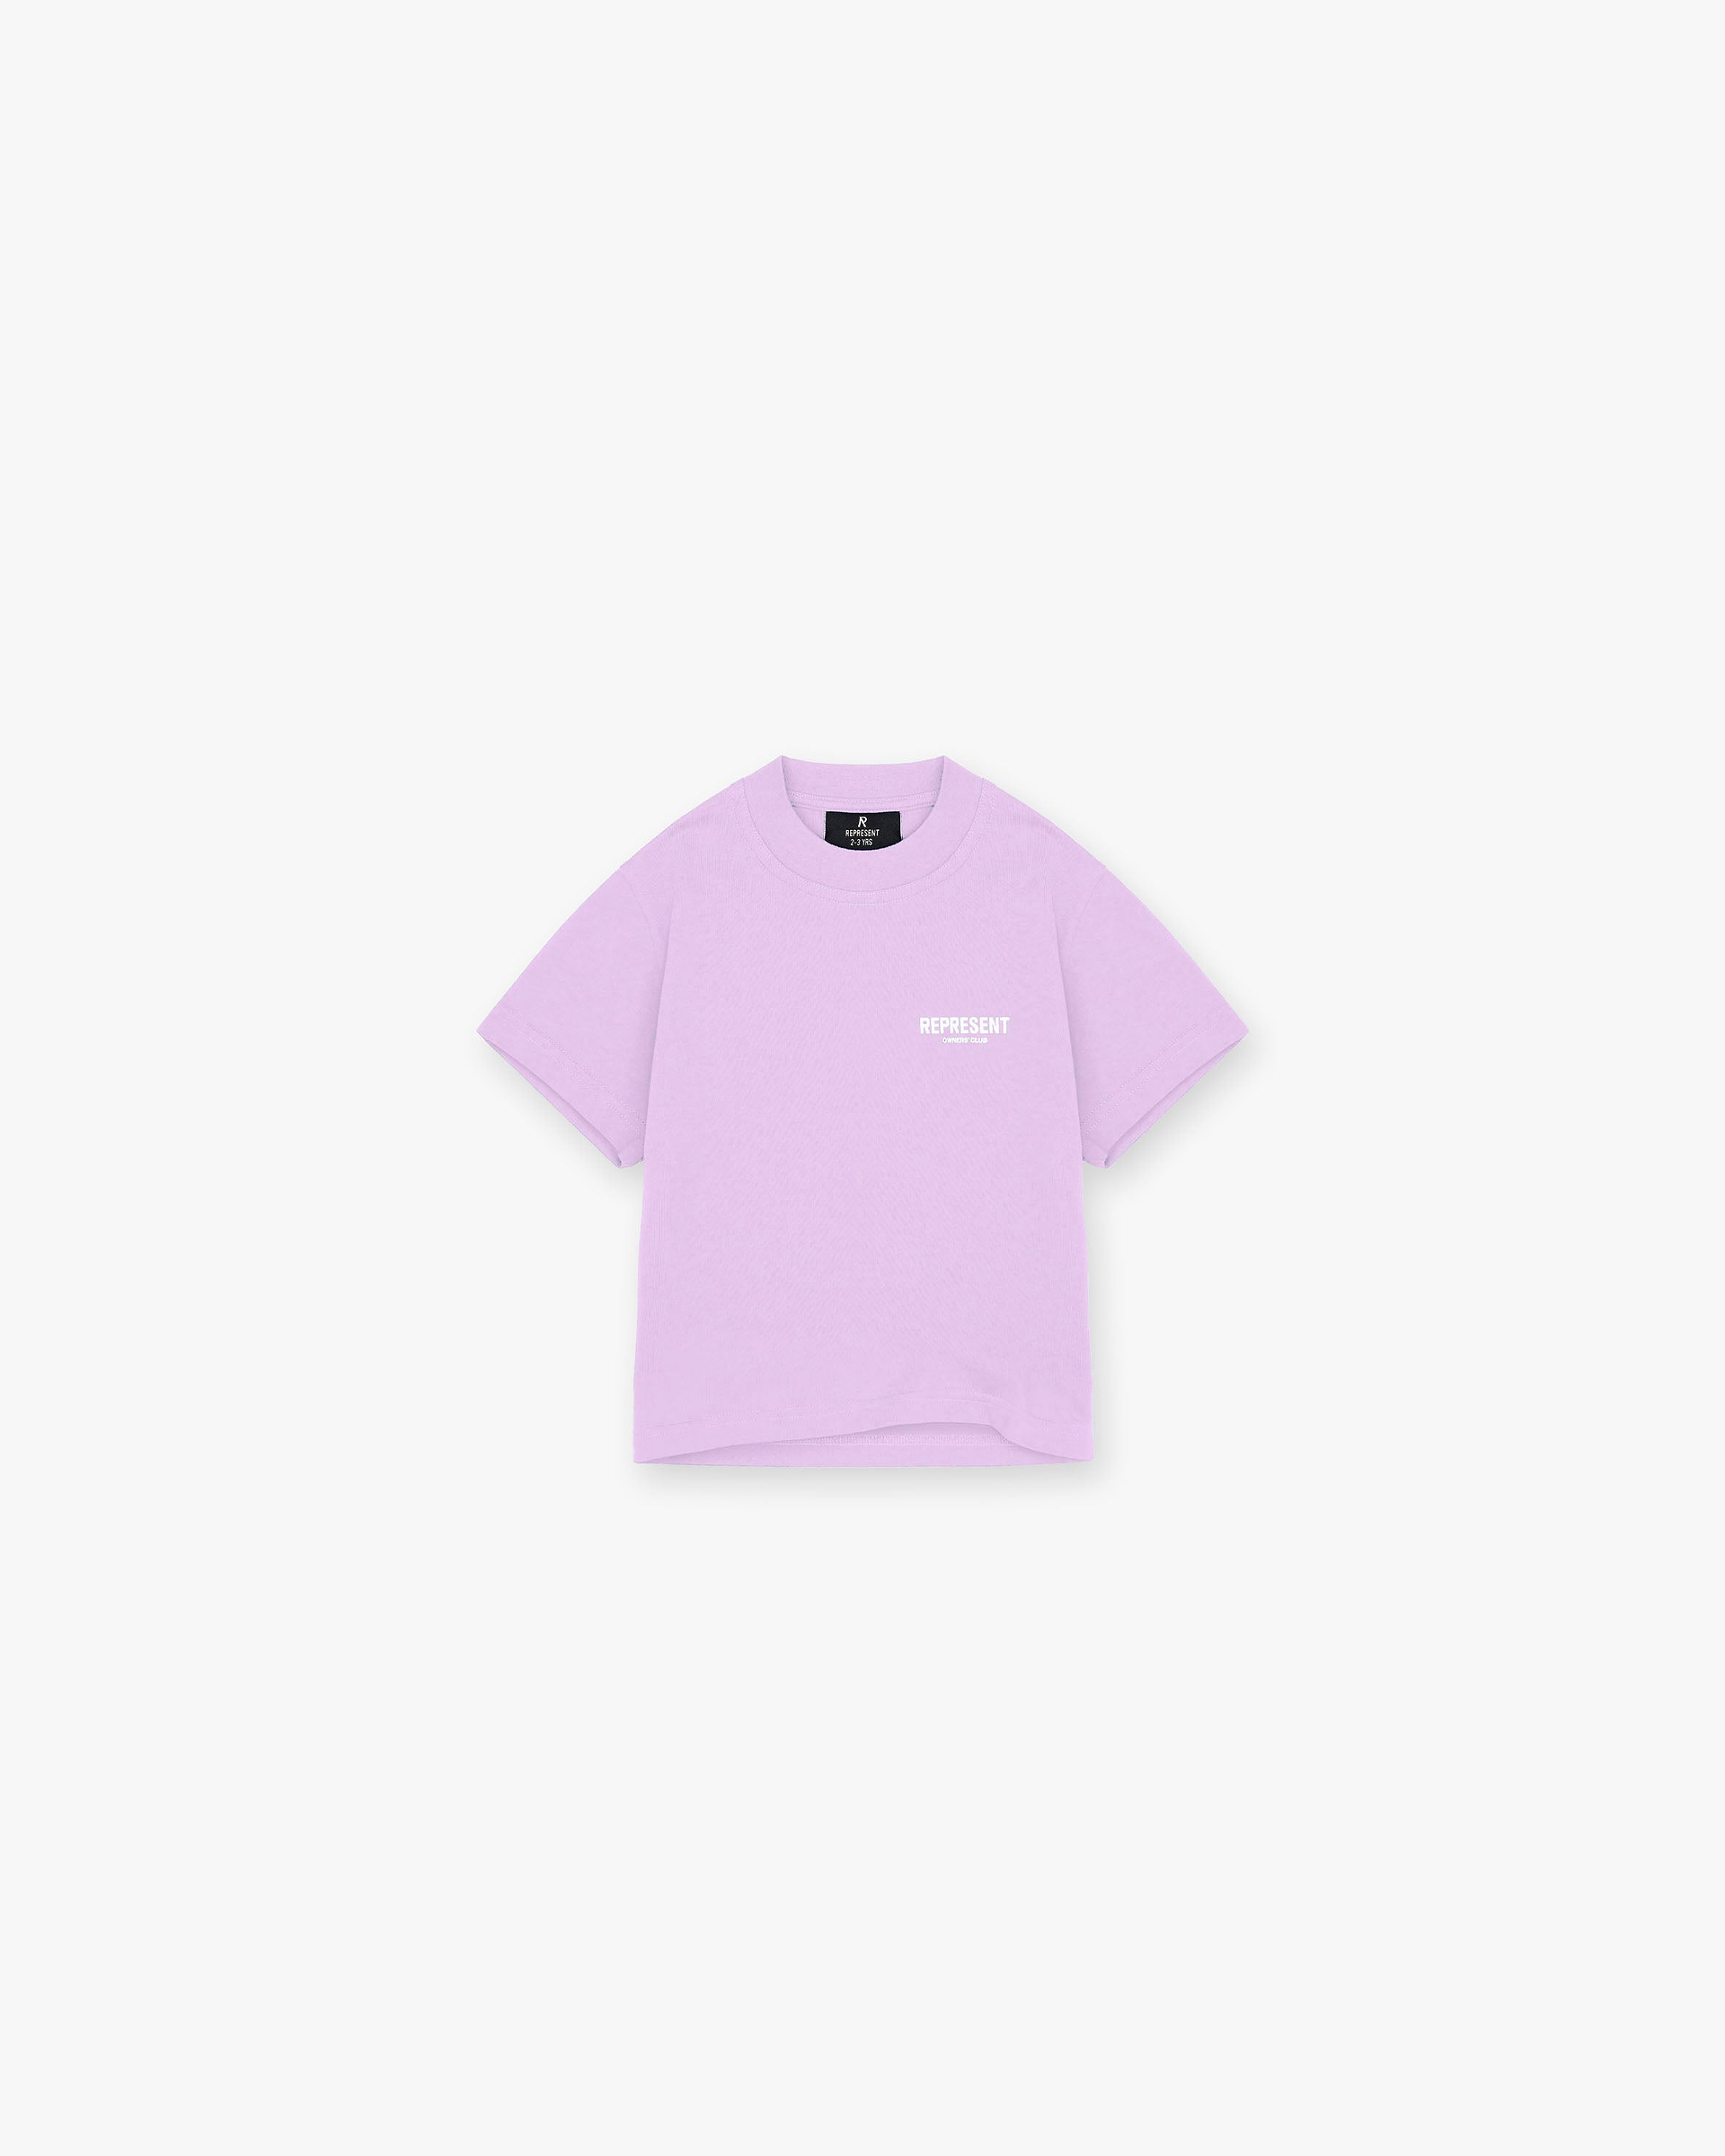 Represent Mini Owners Club T-Shirt - Lilac